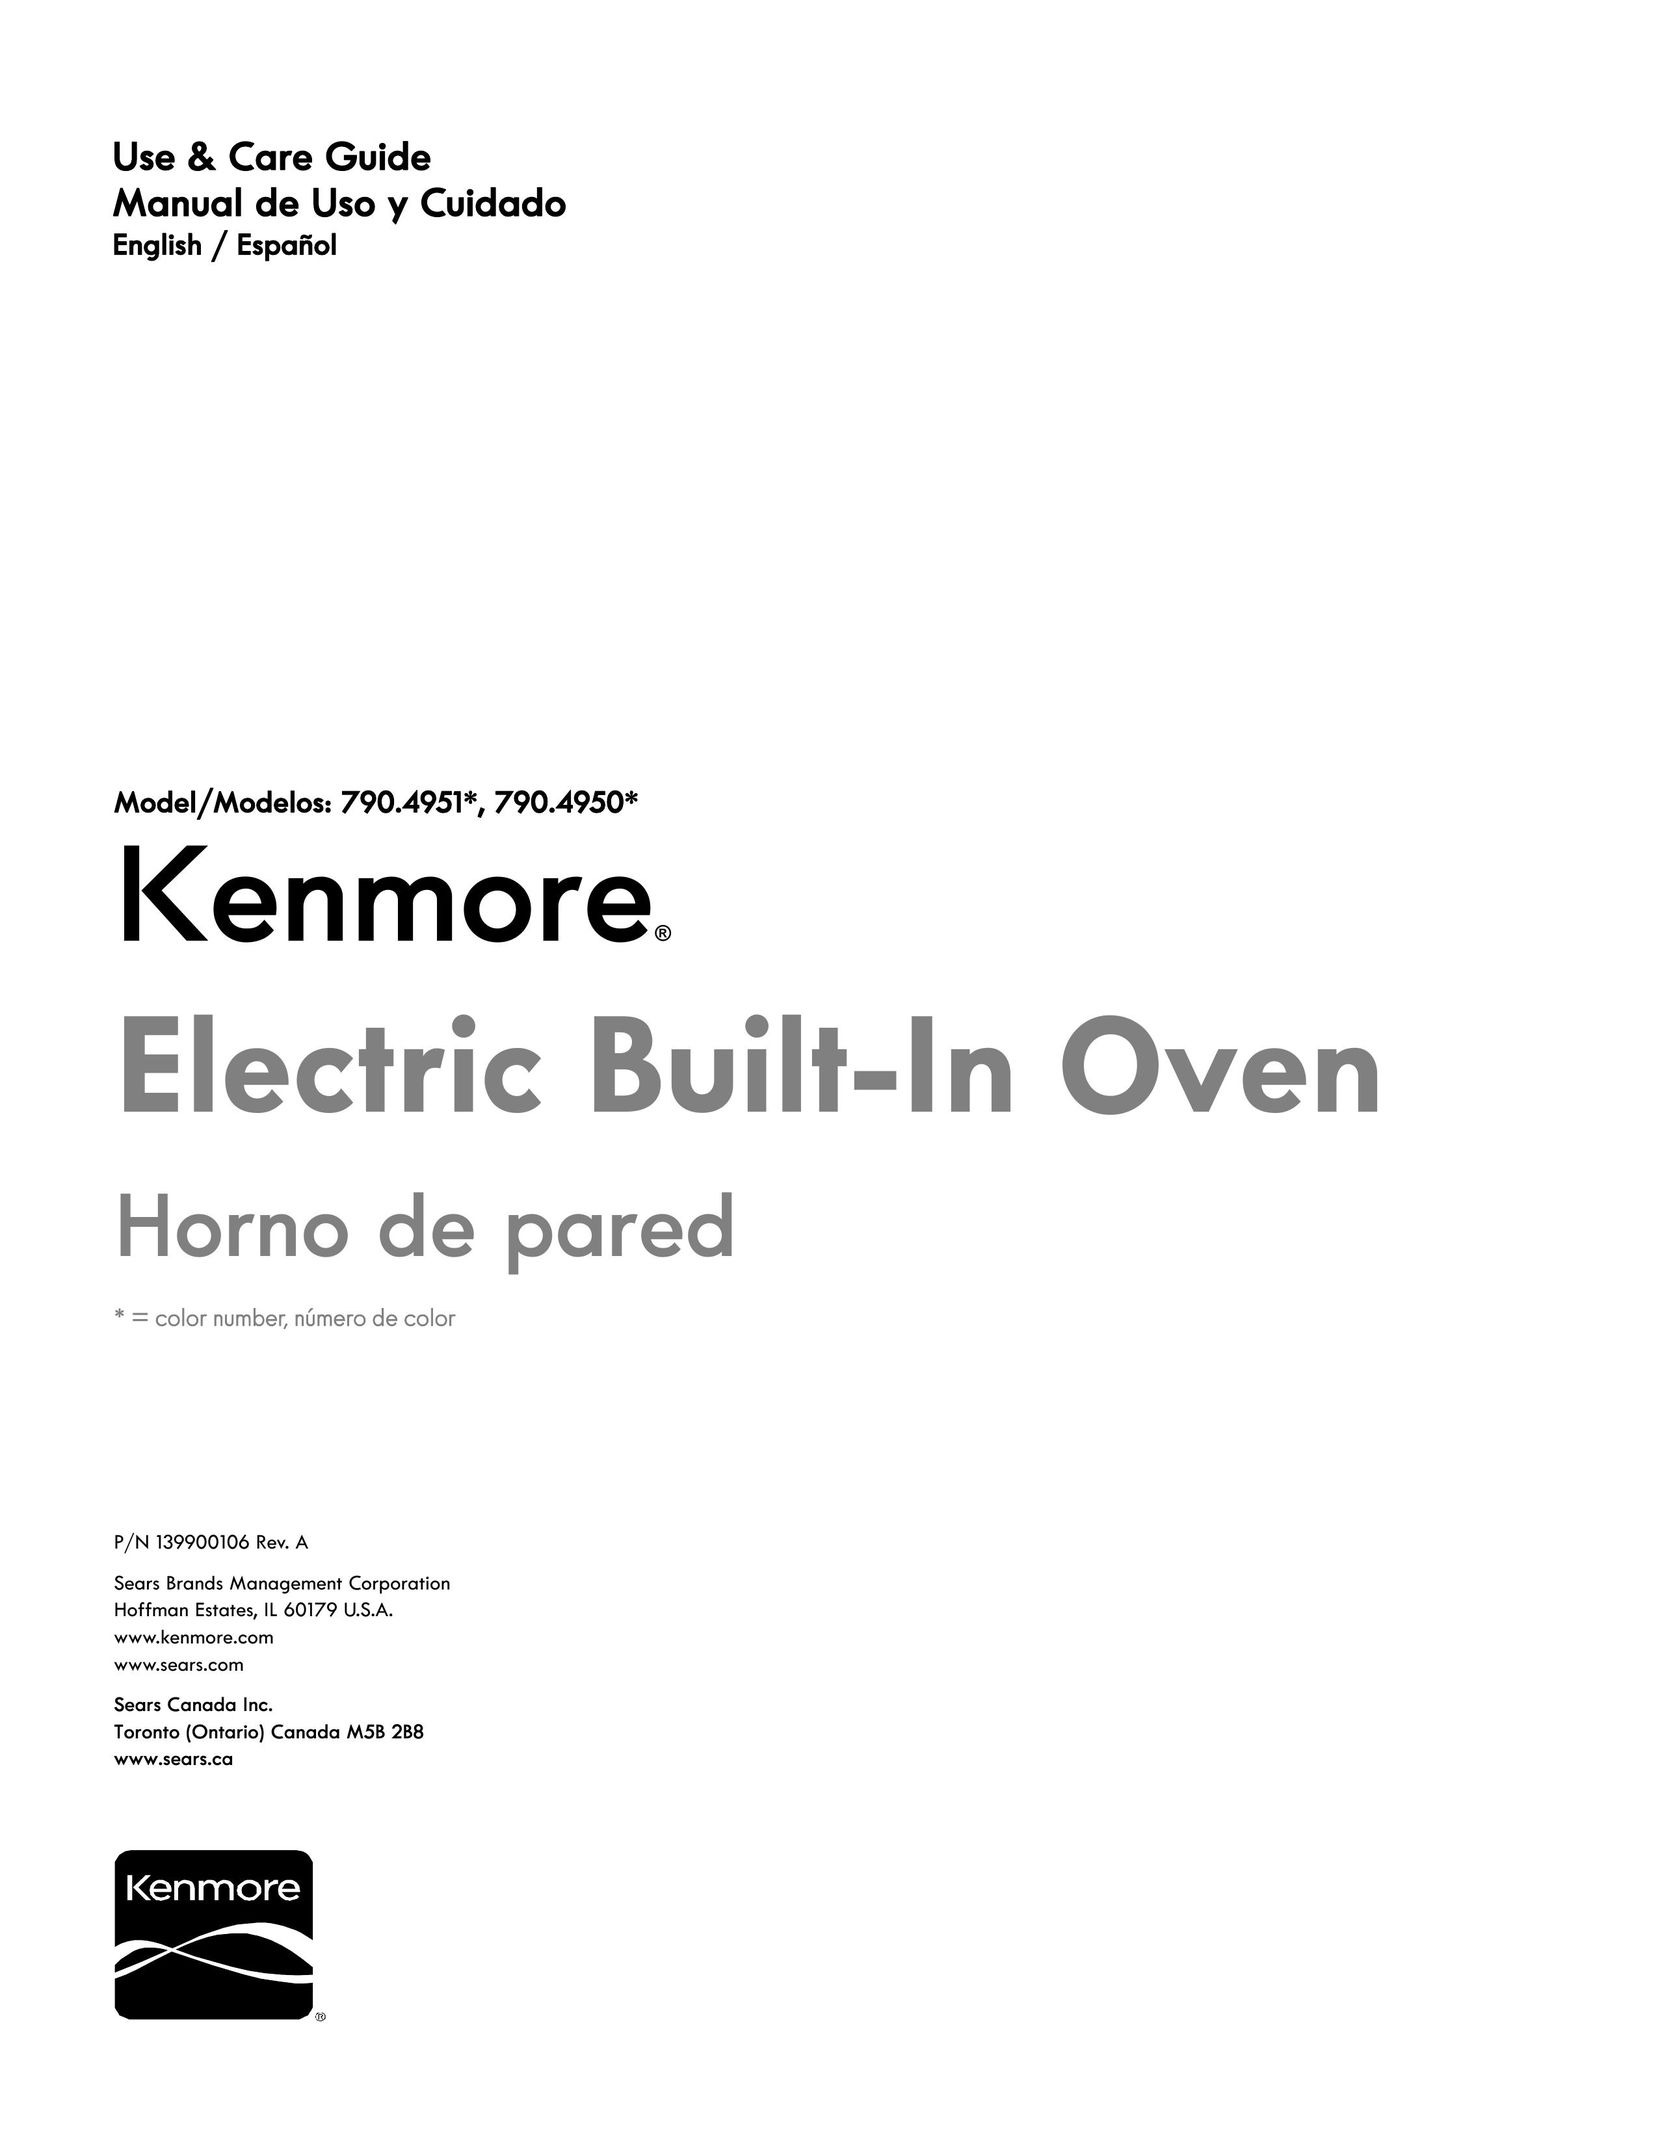 Kenmore 790.4951 Oven User Manual